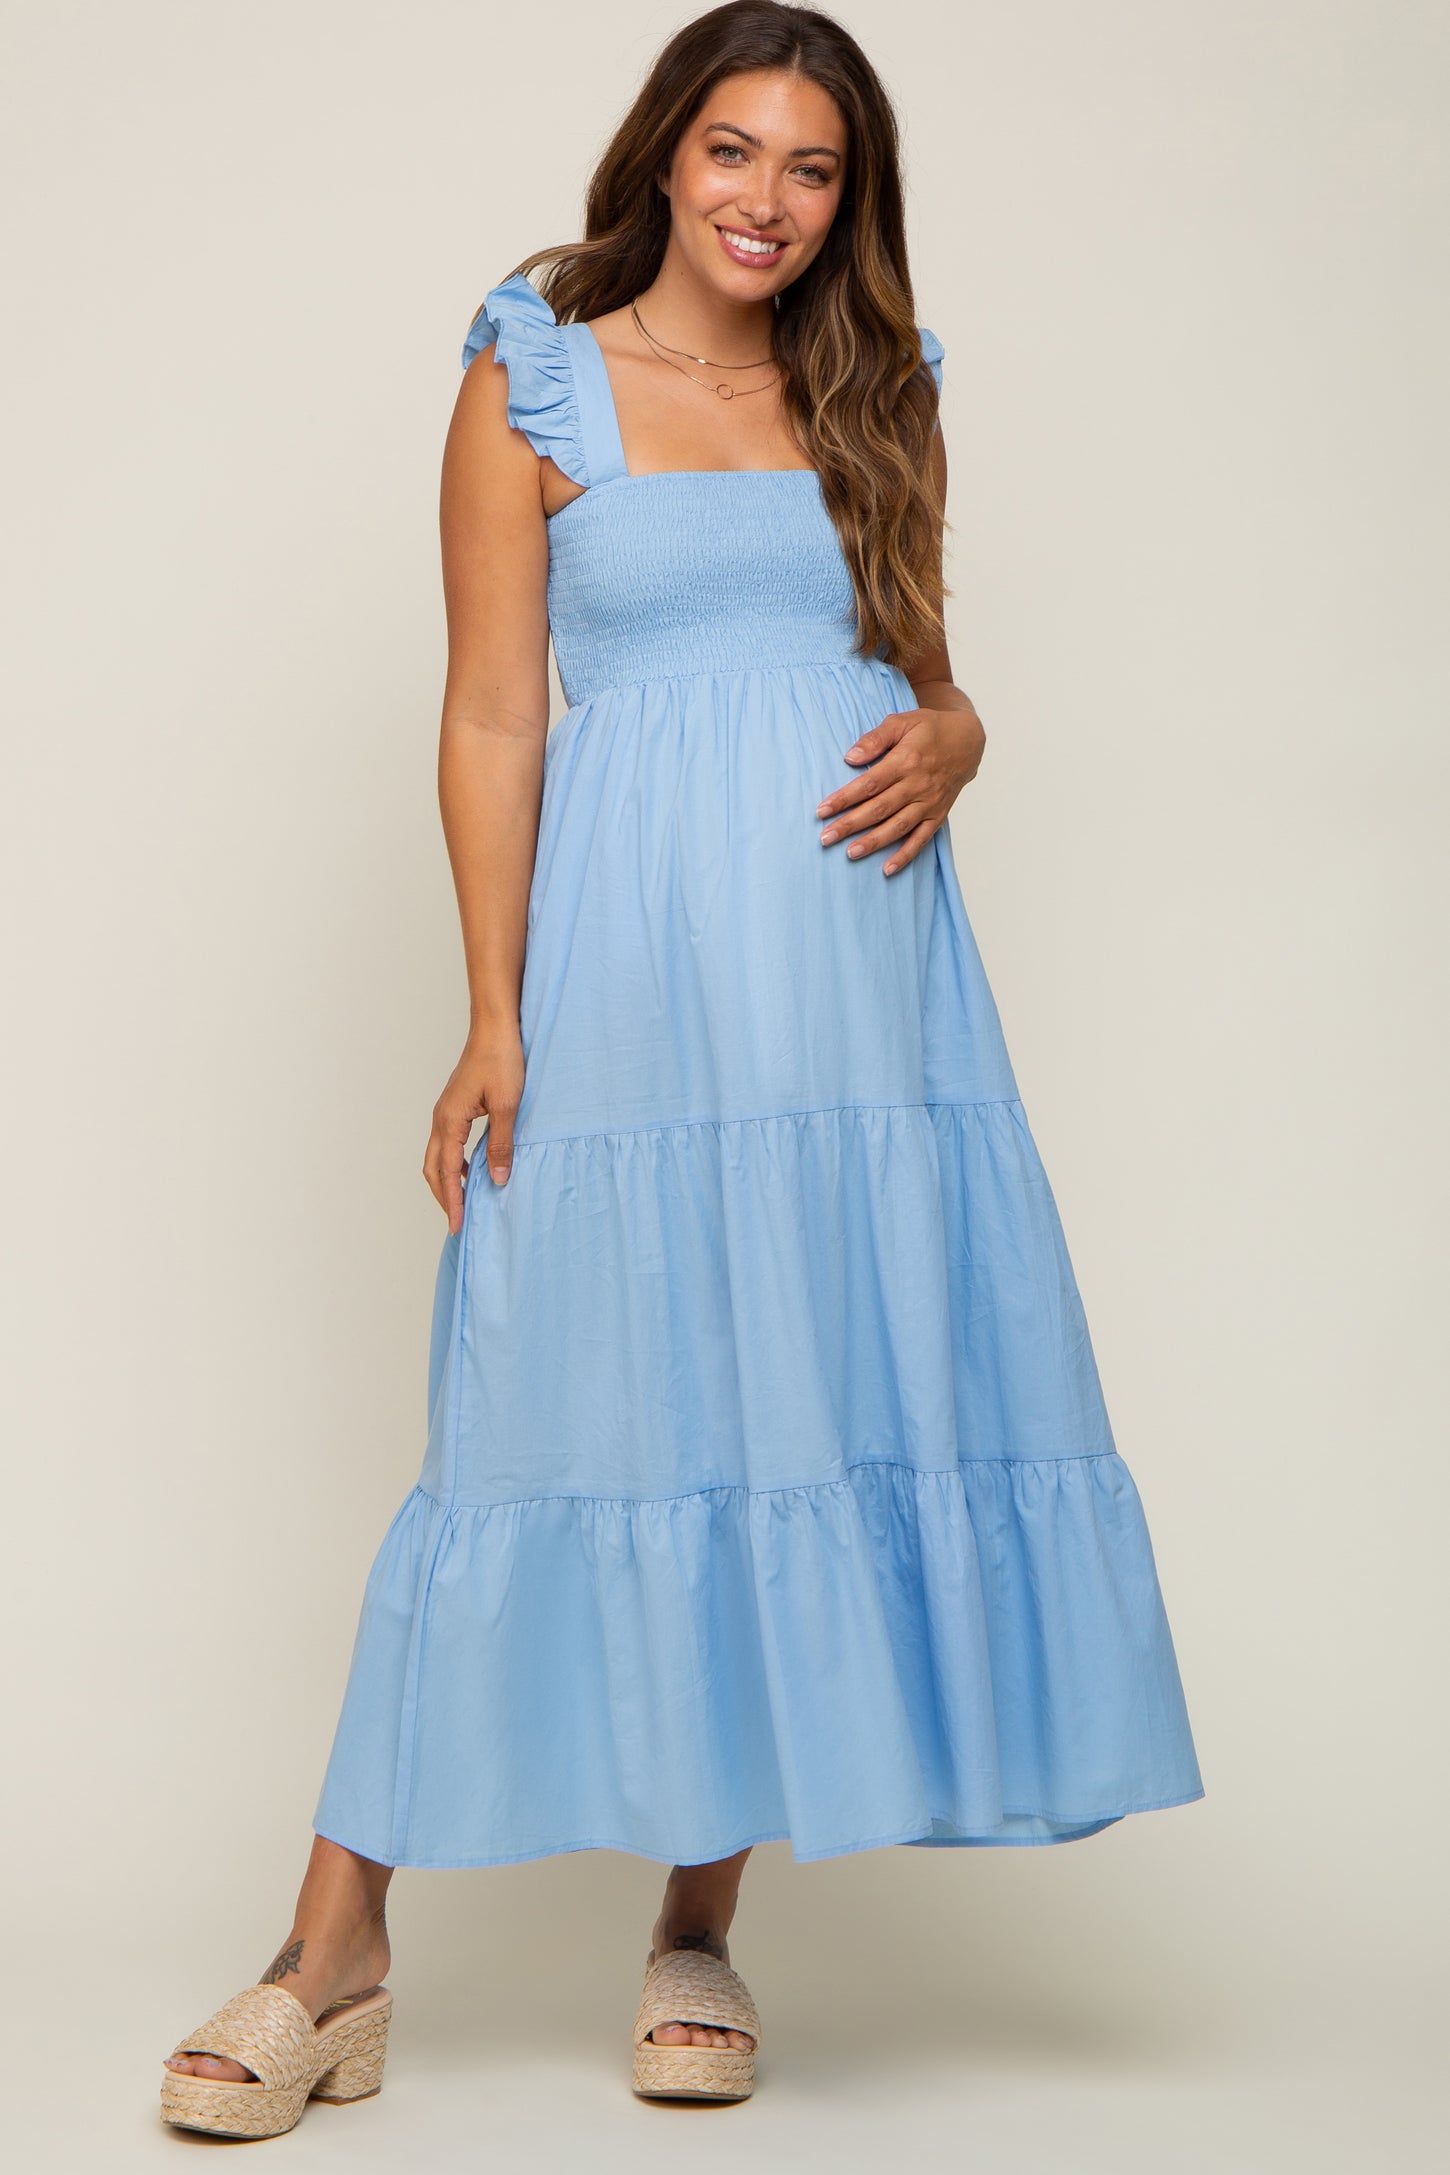 Light Blue Sleeveless Tiered Maternity Maxi Dress